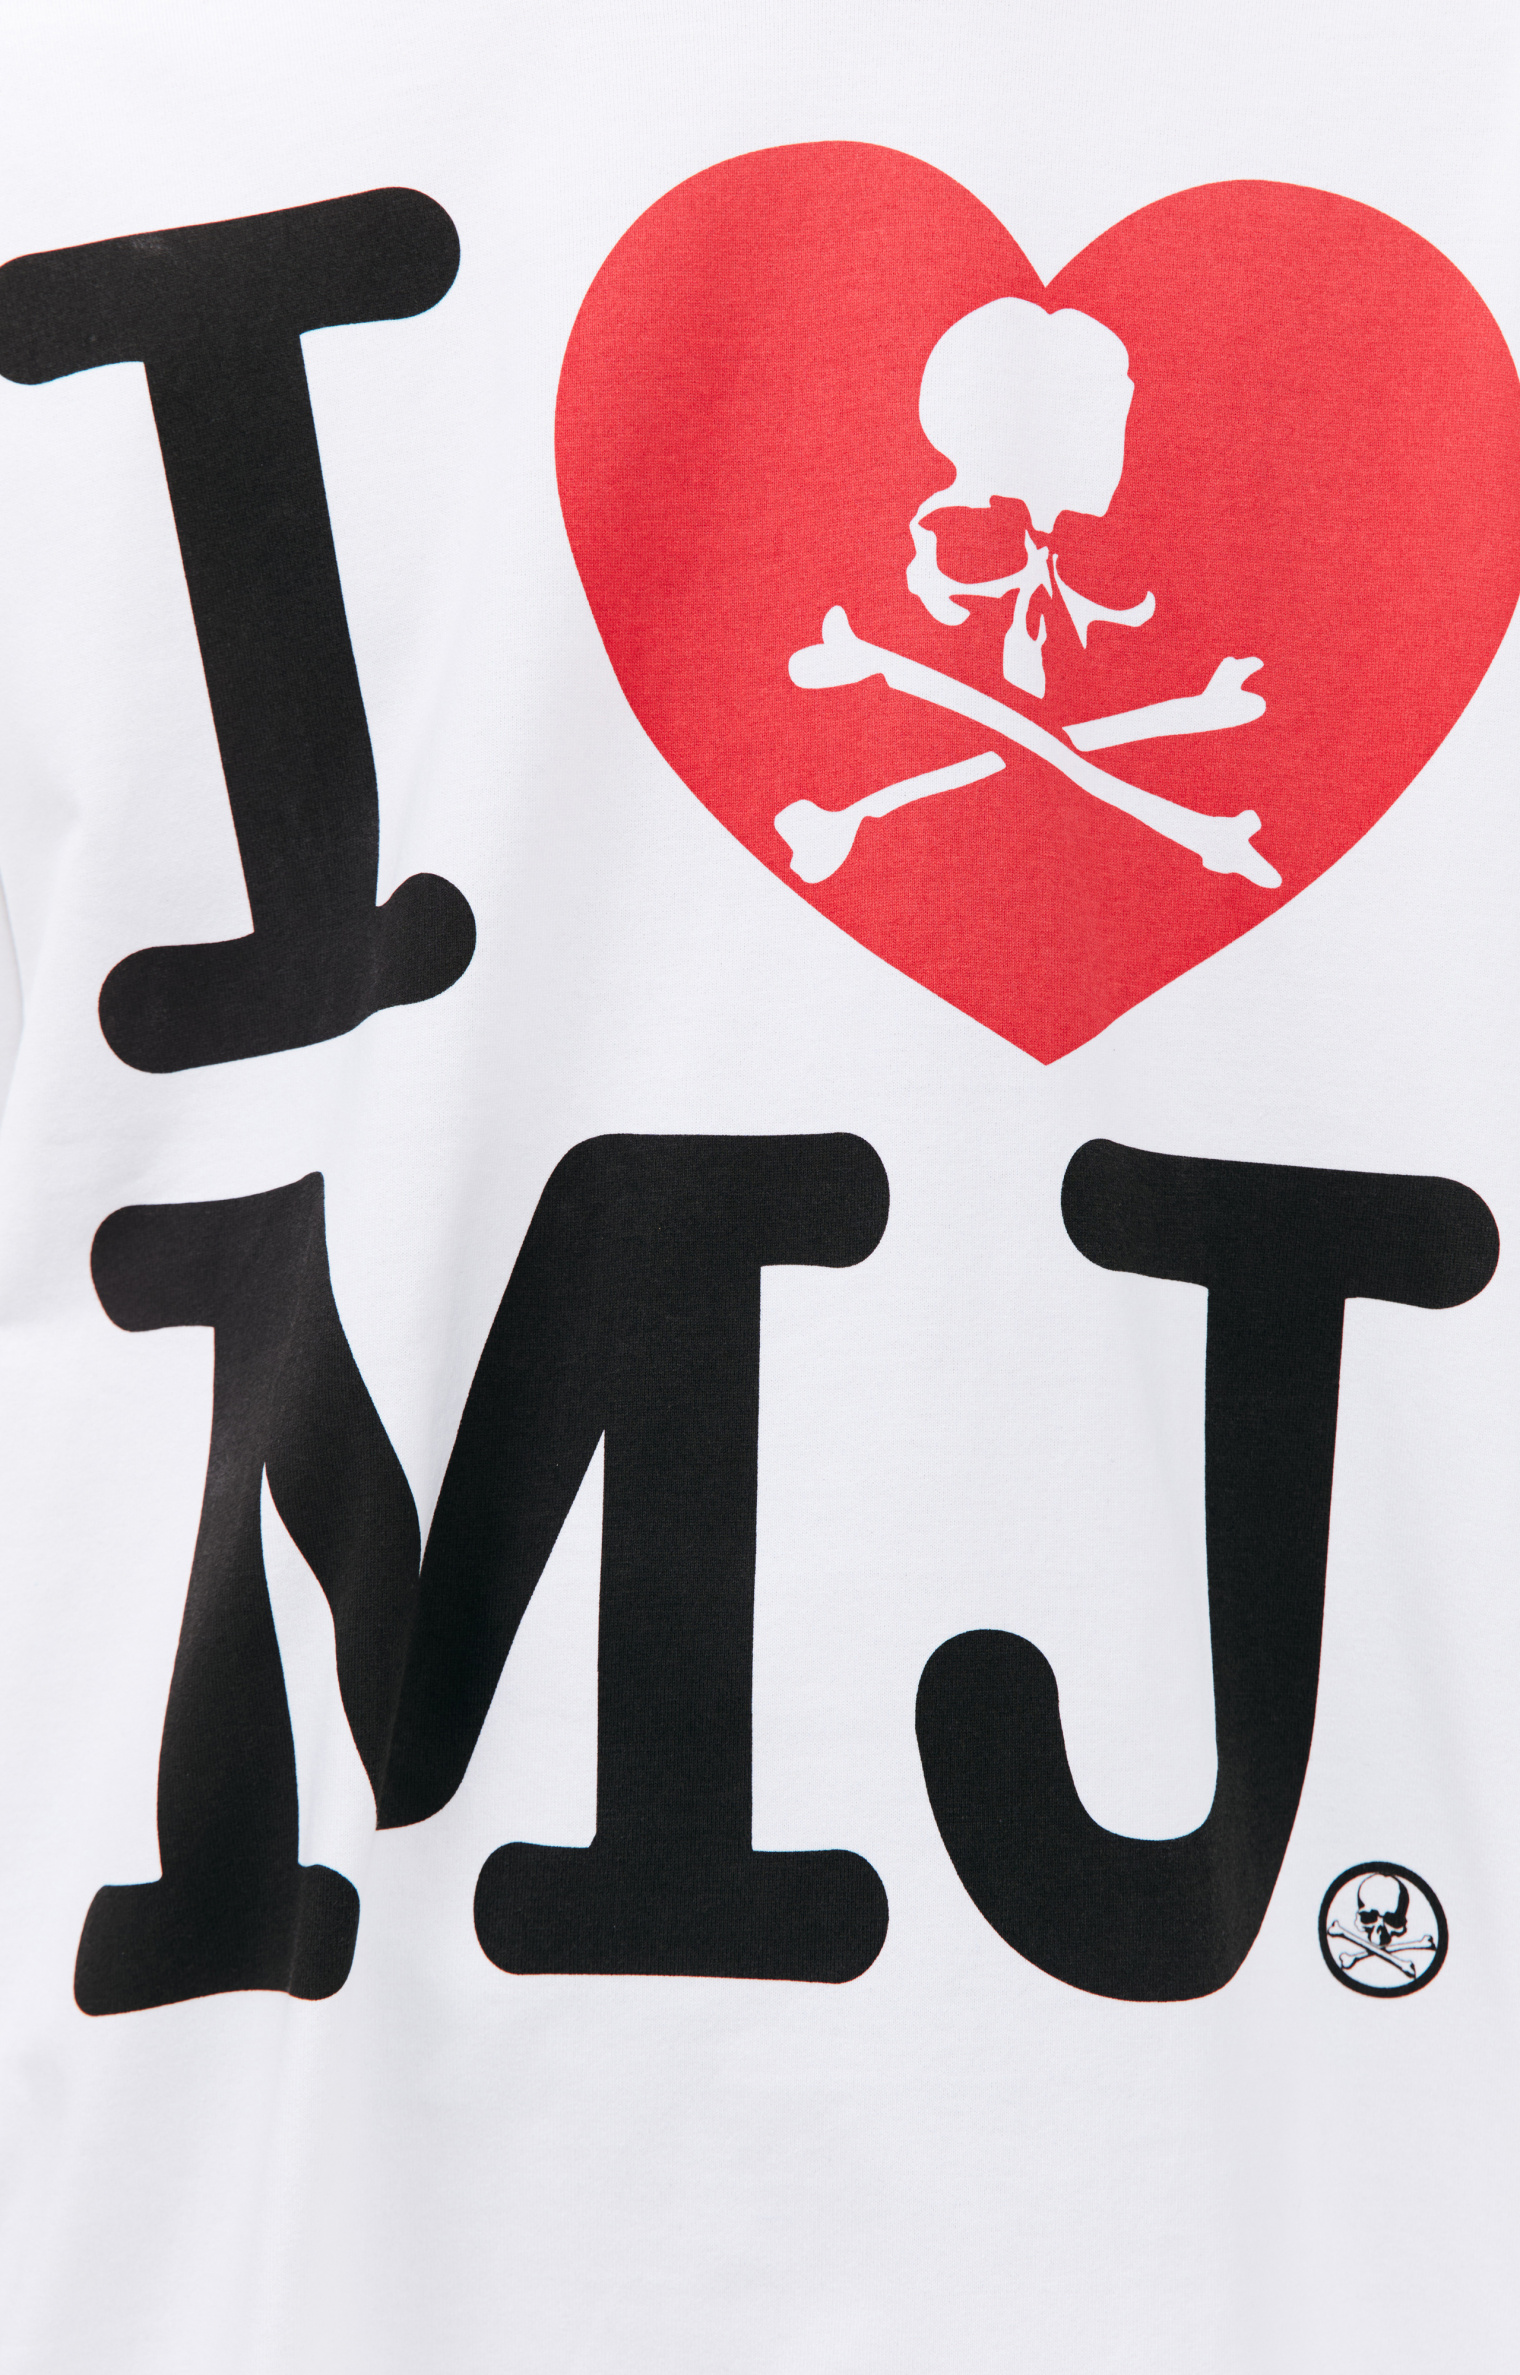 Mastermind WORLD \'I LOVE MJ\' printed t-shirt